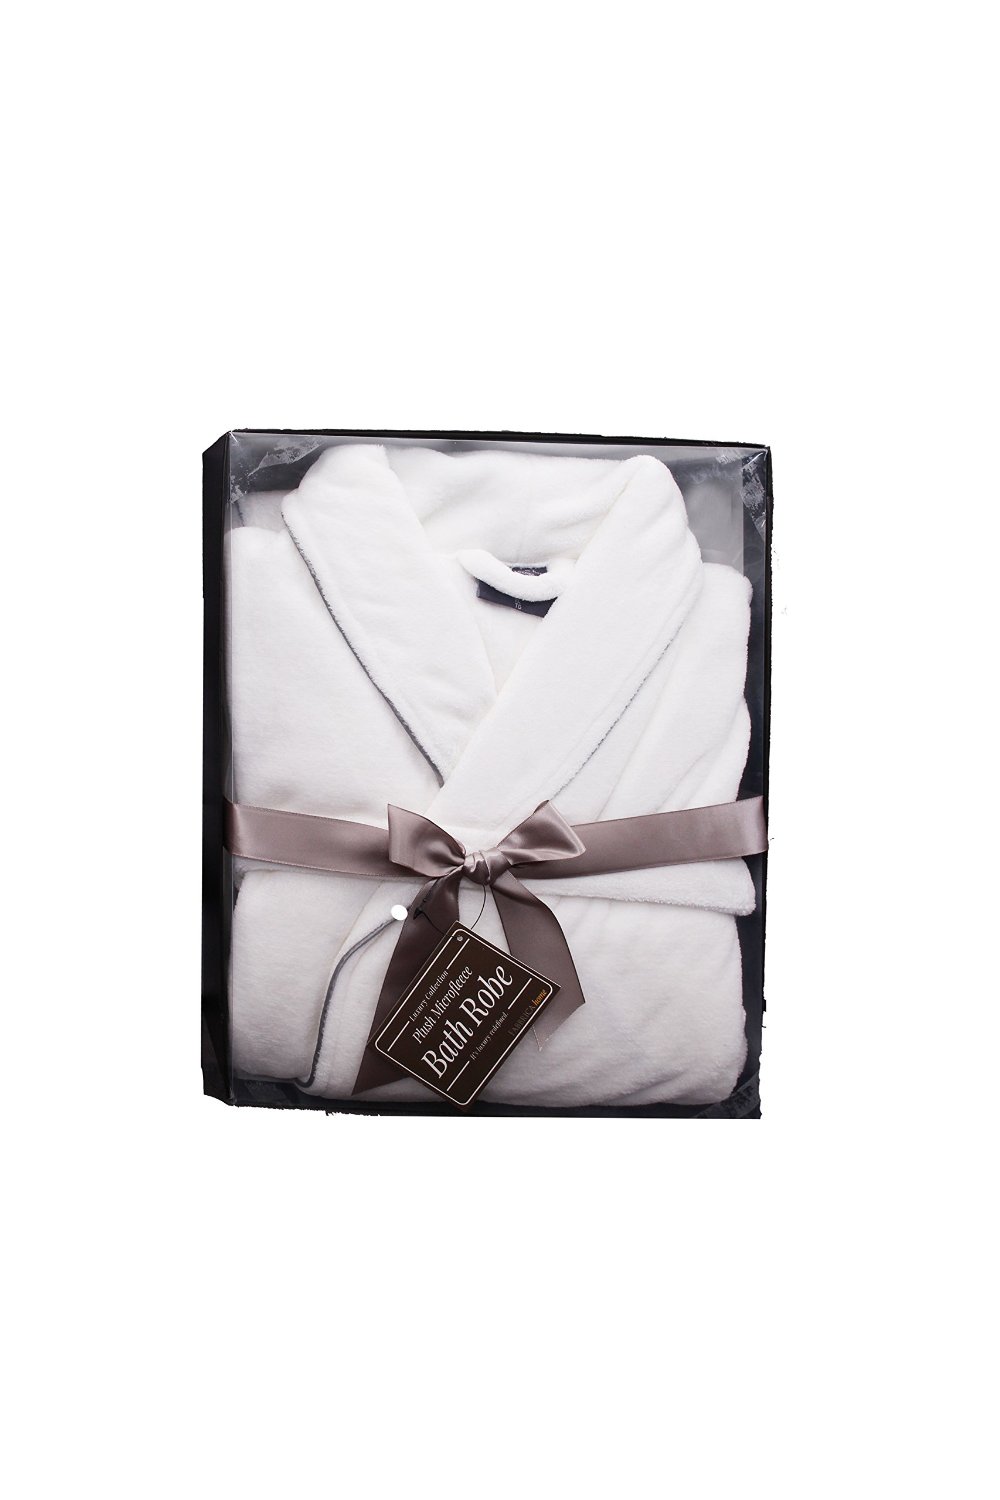 bathrobe in gift box.jpg